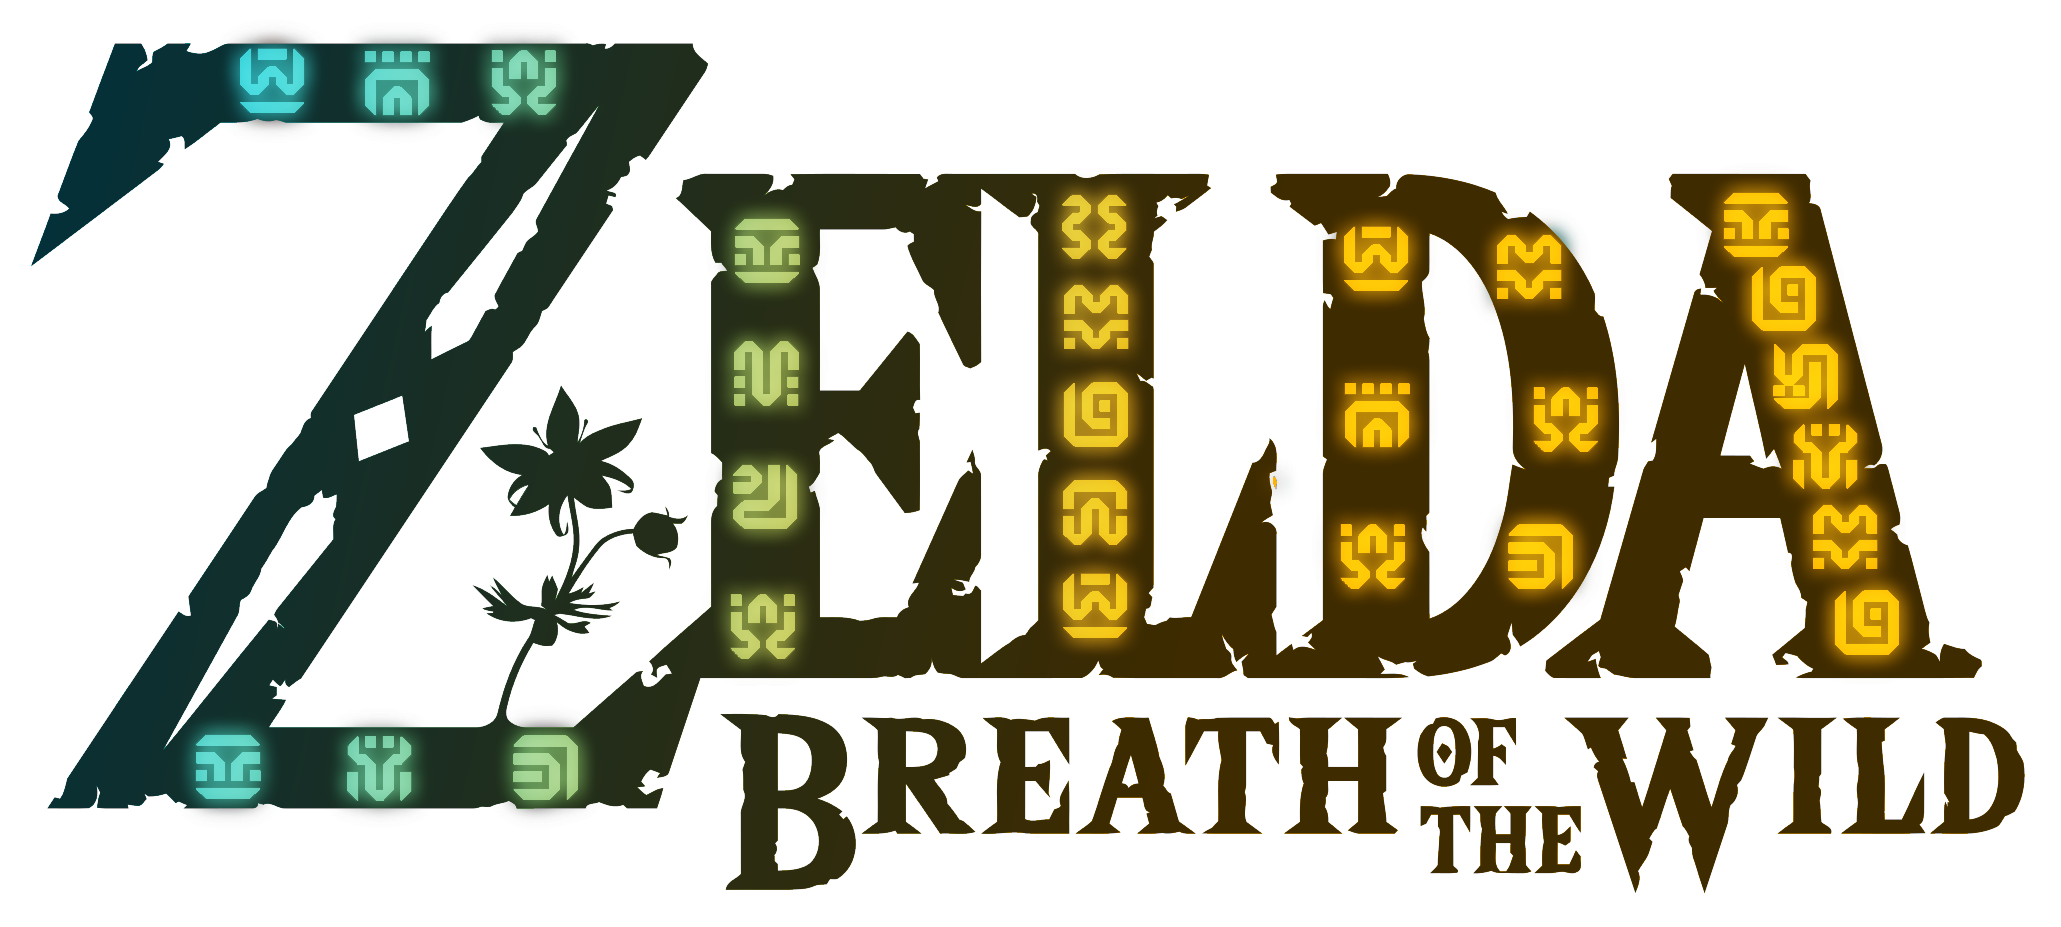 The Legend Of Zelda Breath Of The Wild Logo No Background